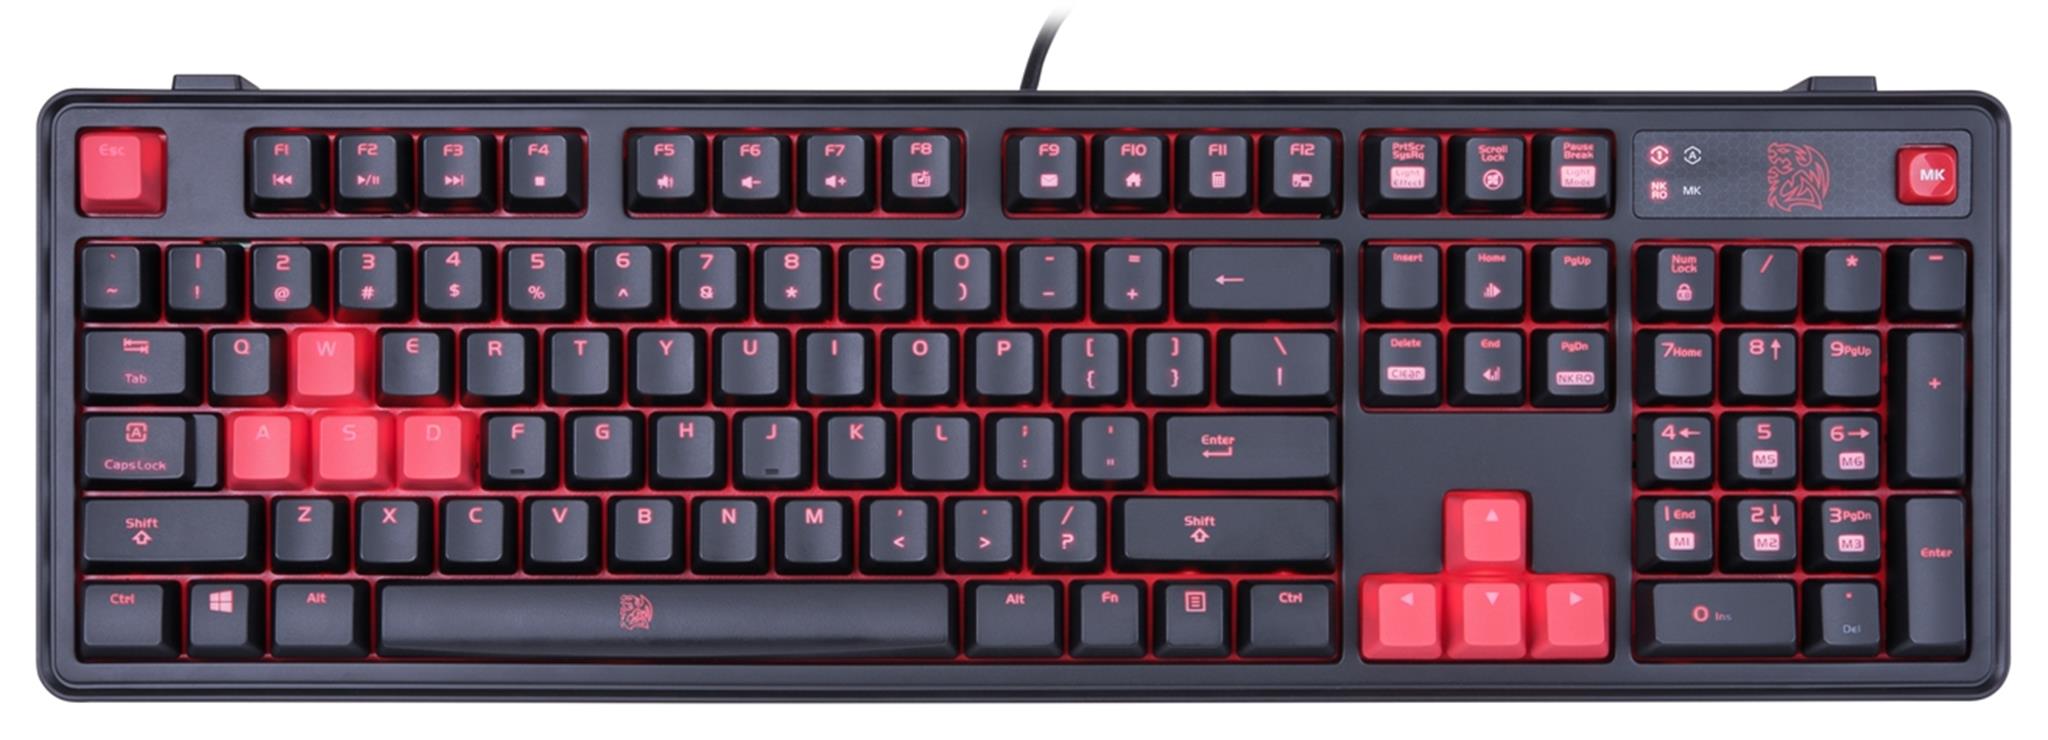 tt-esports-meka-pro-cherry-mx-mechanical-gaming-keyboard-has-9-additional-red-keycaps